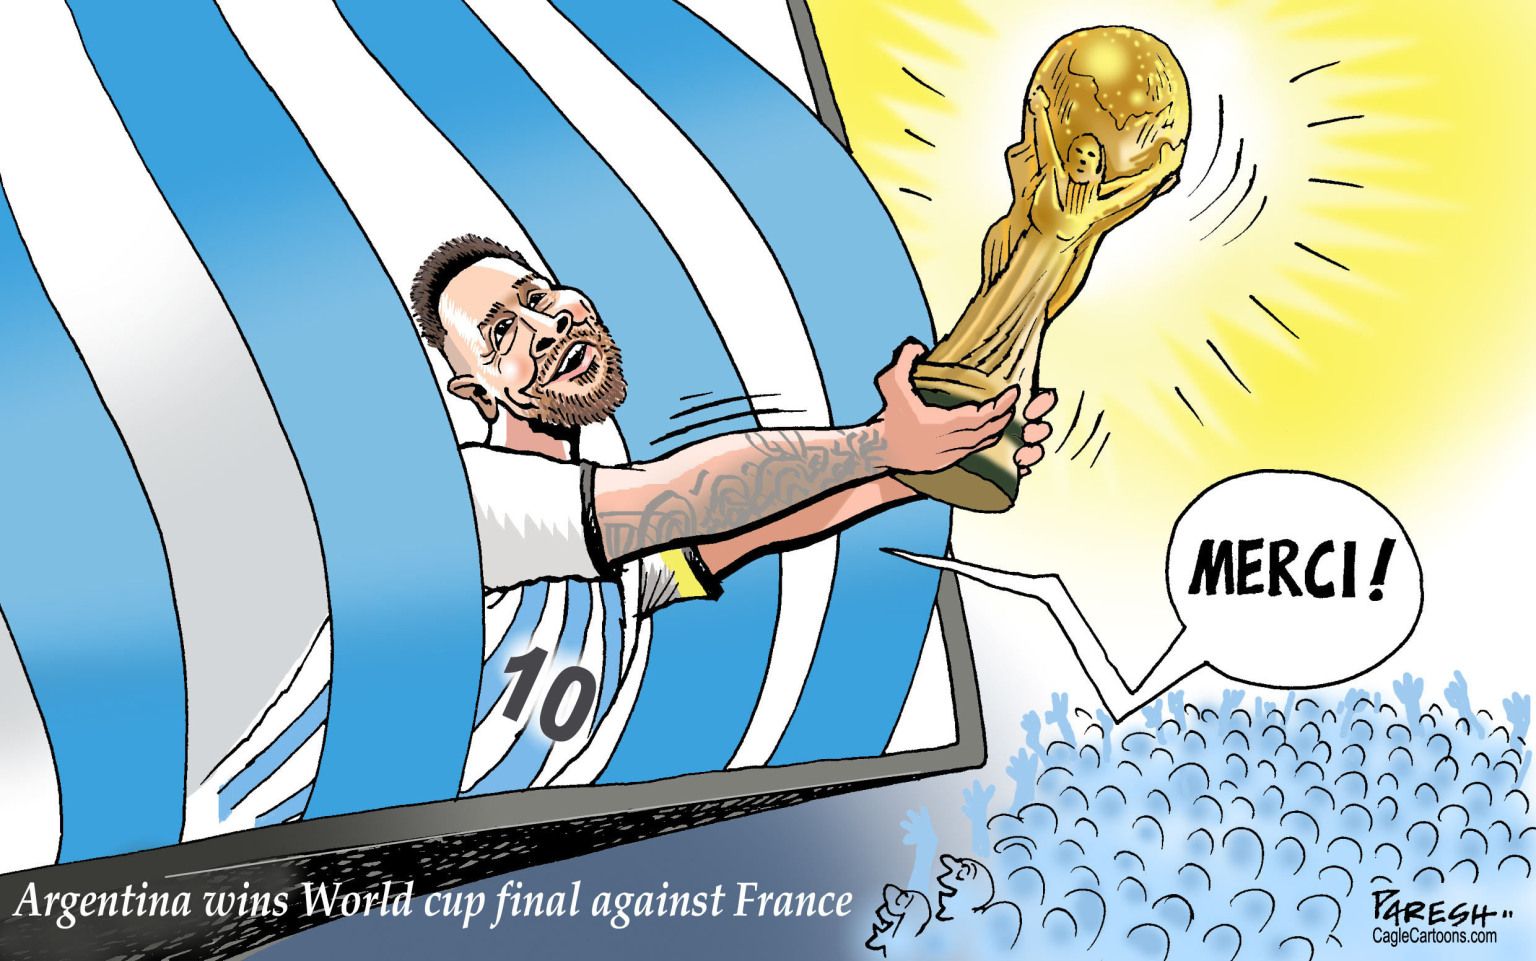 Argentina wins world cup - newsjustin.press - editorial cartoon